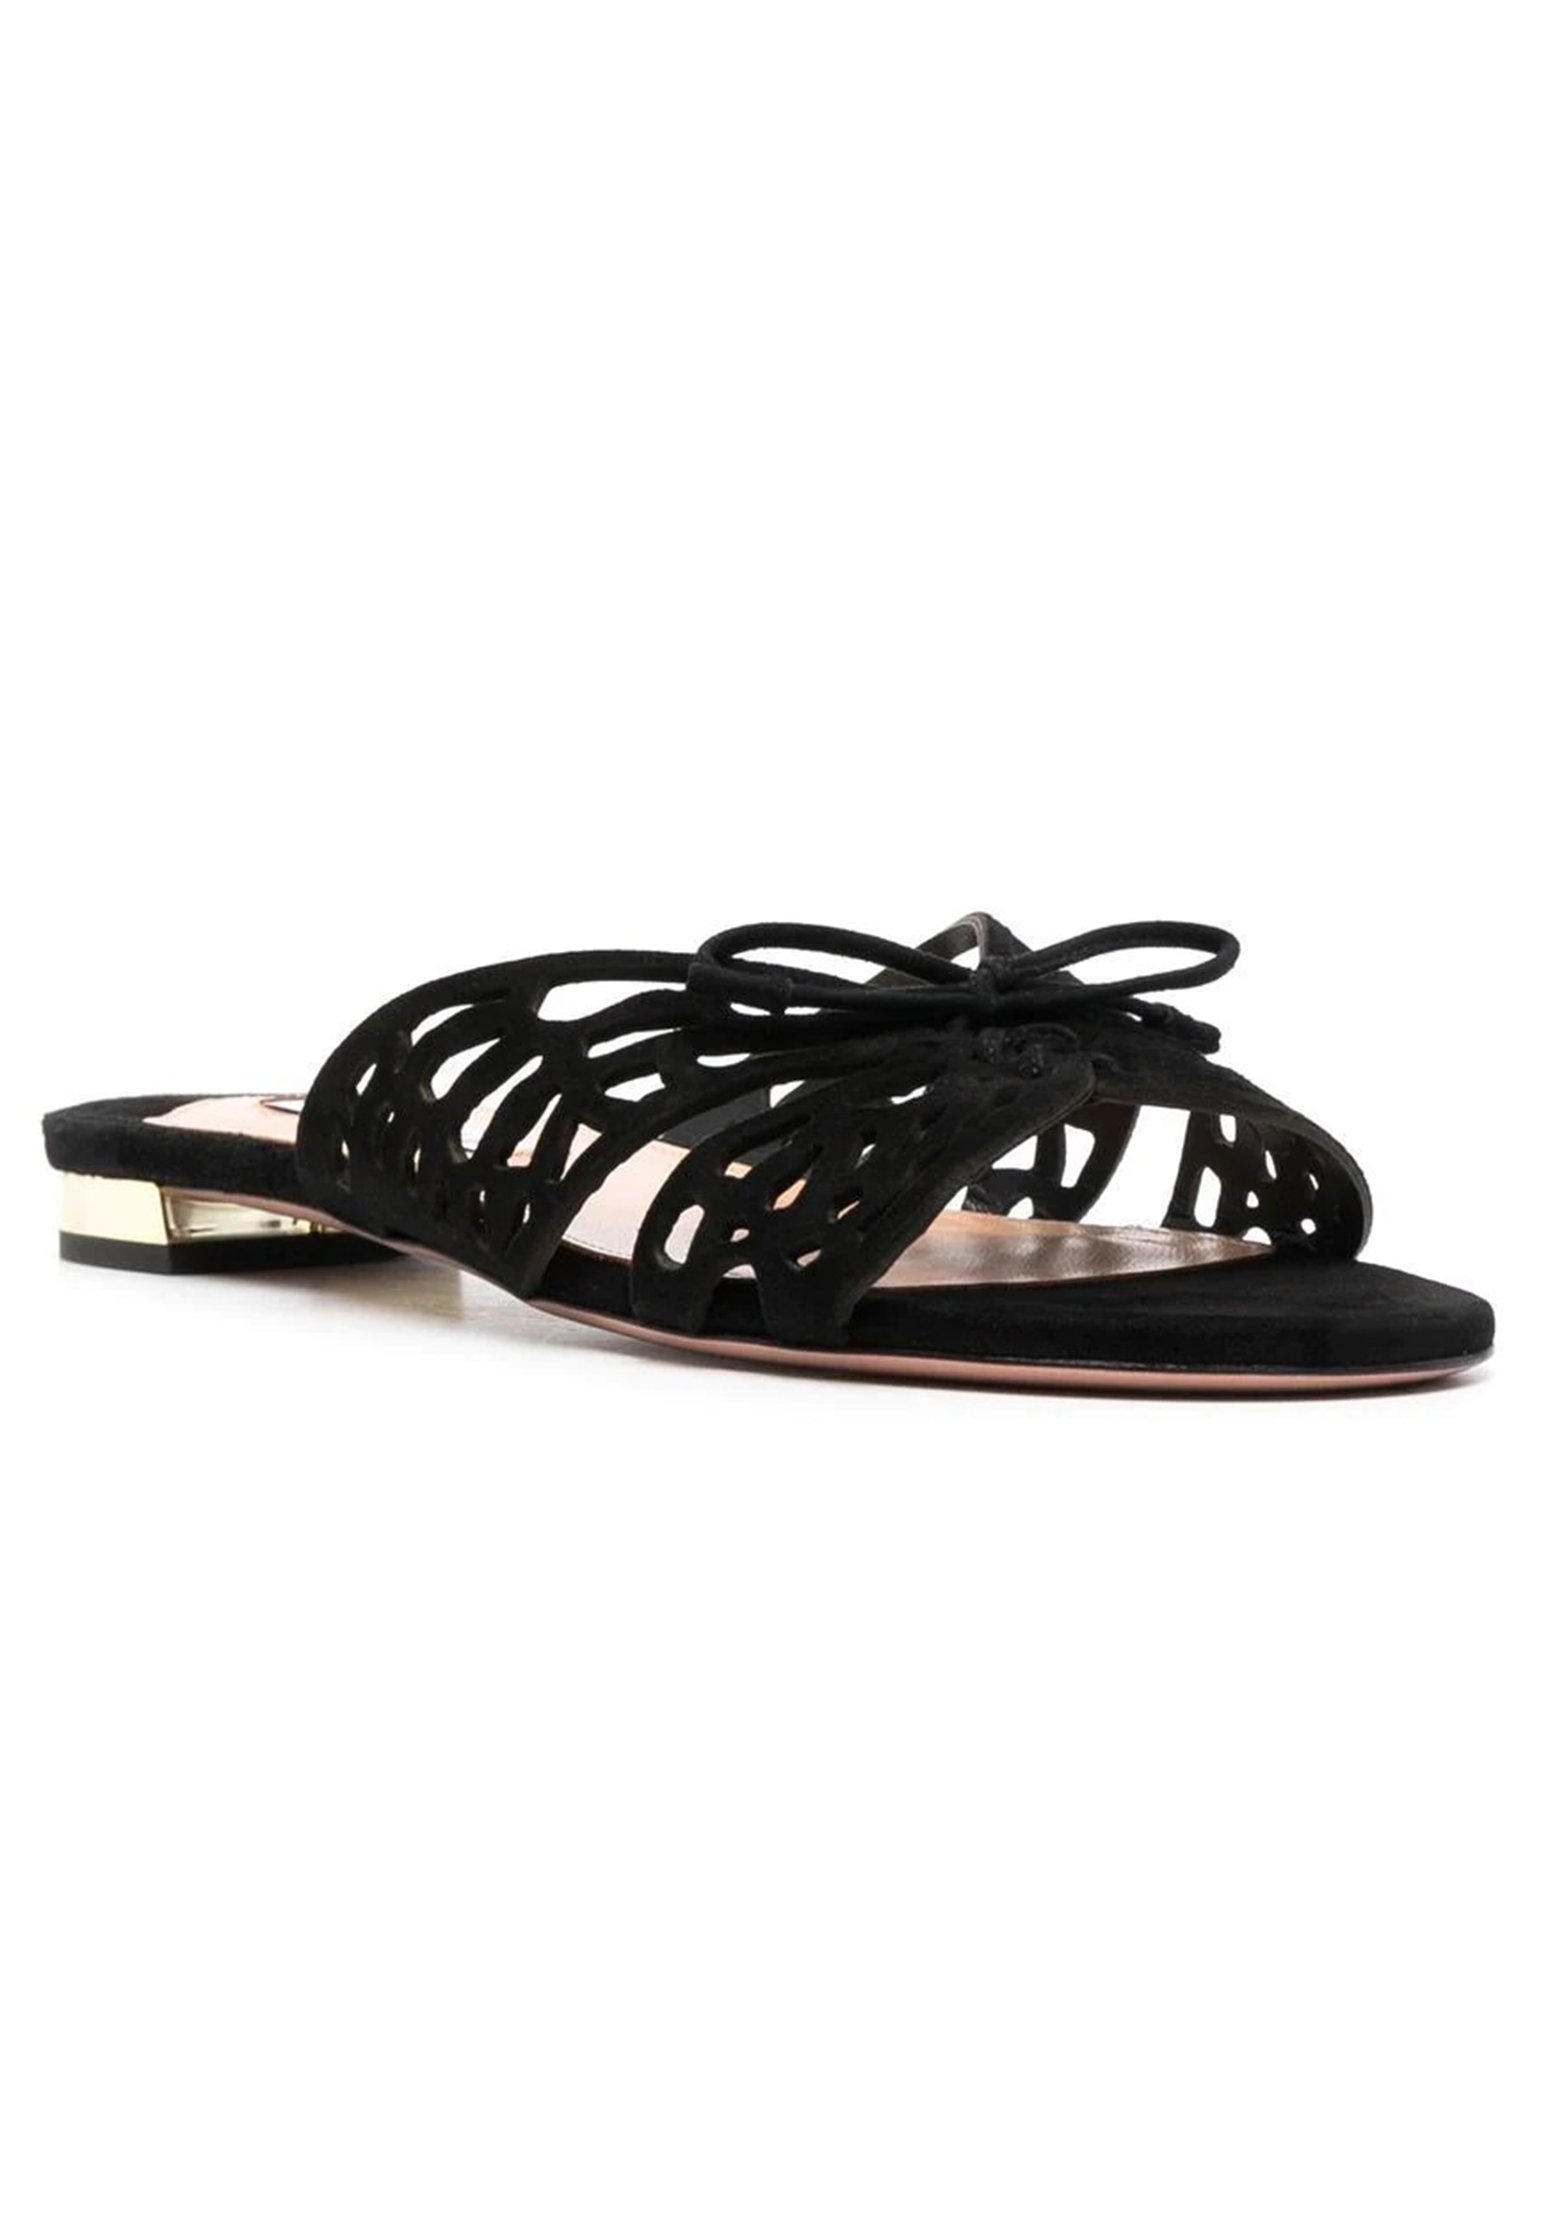 Sandals AQUAZZURA Color: black (Code: 656) in online store Allure